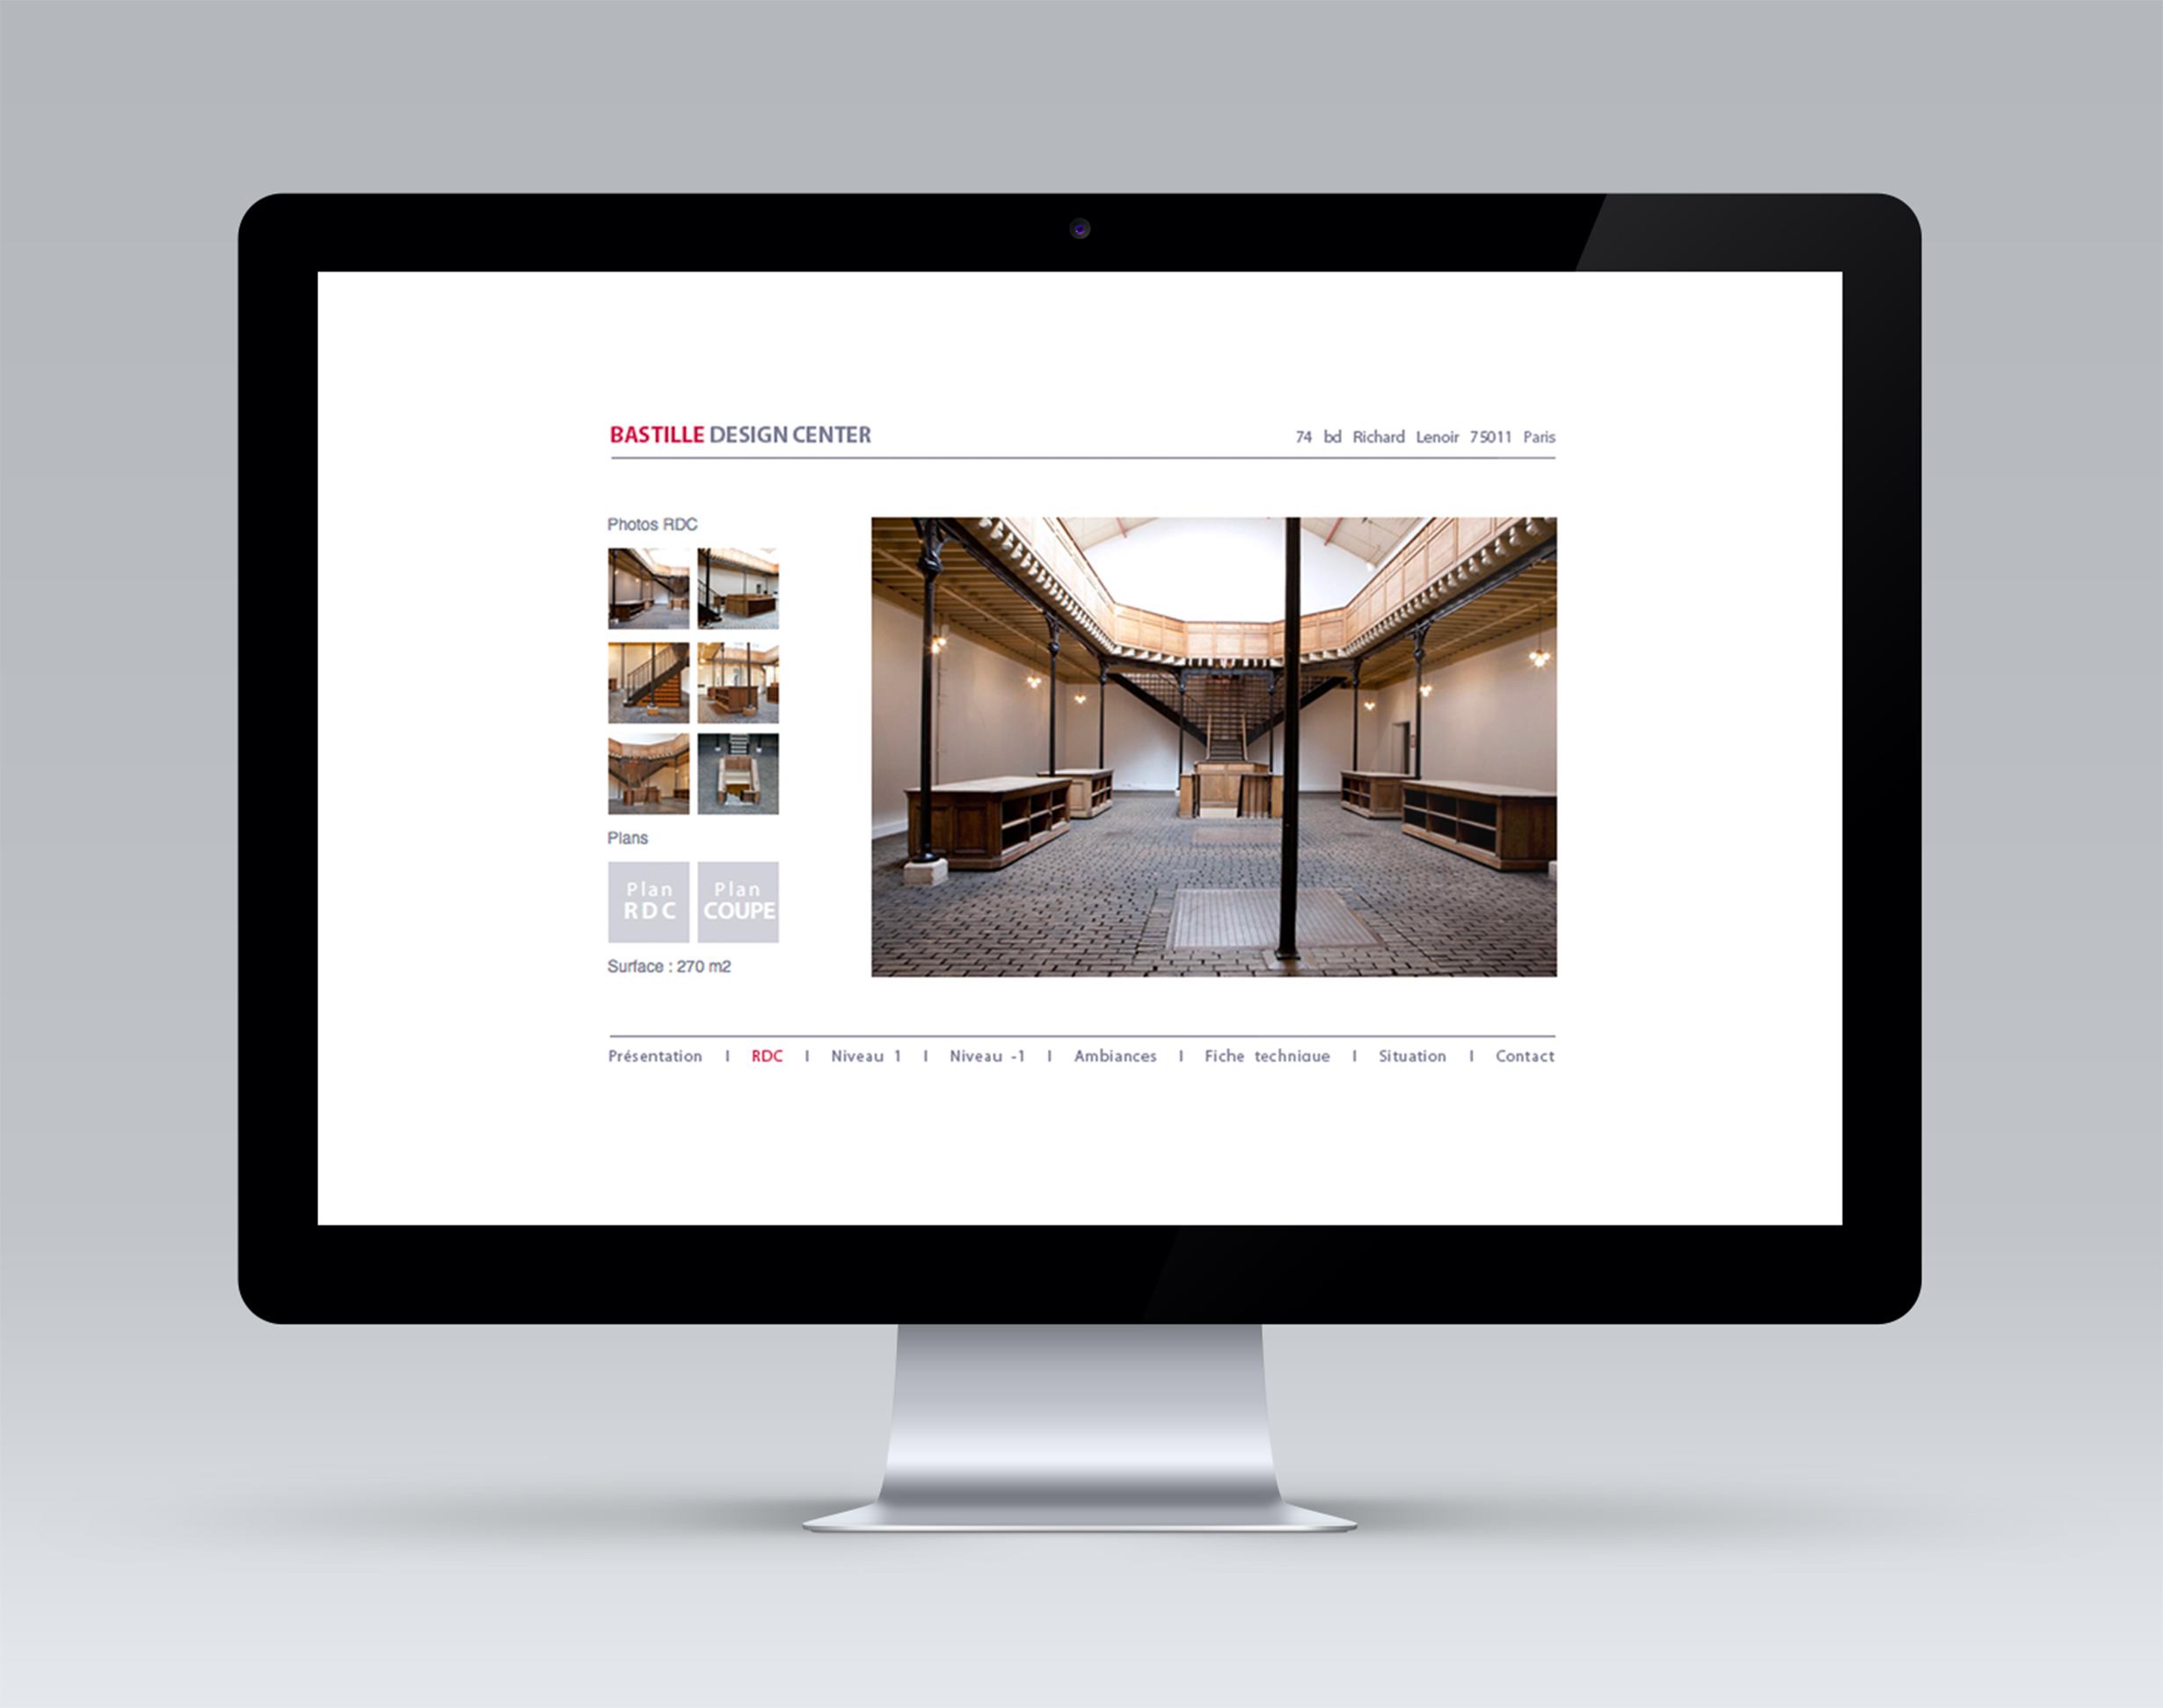 Bastille design center web